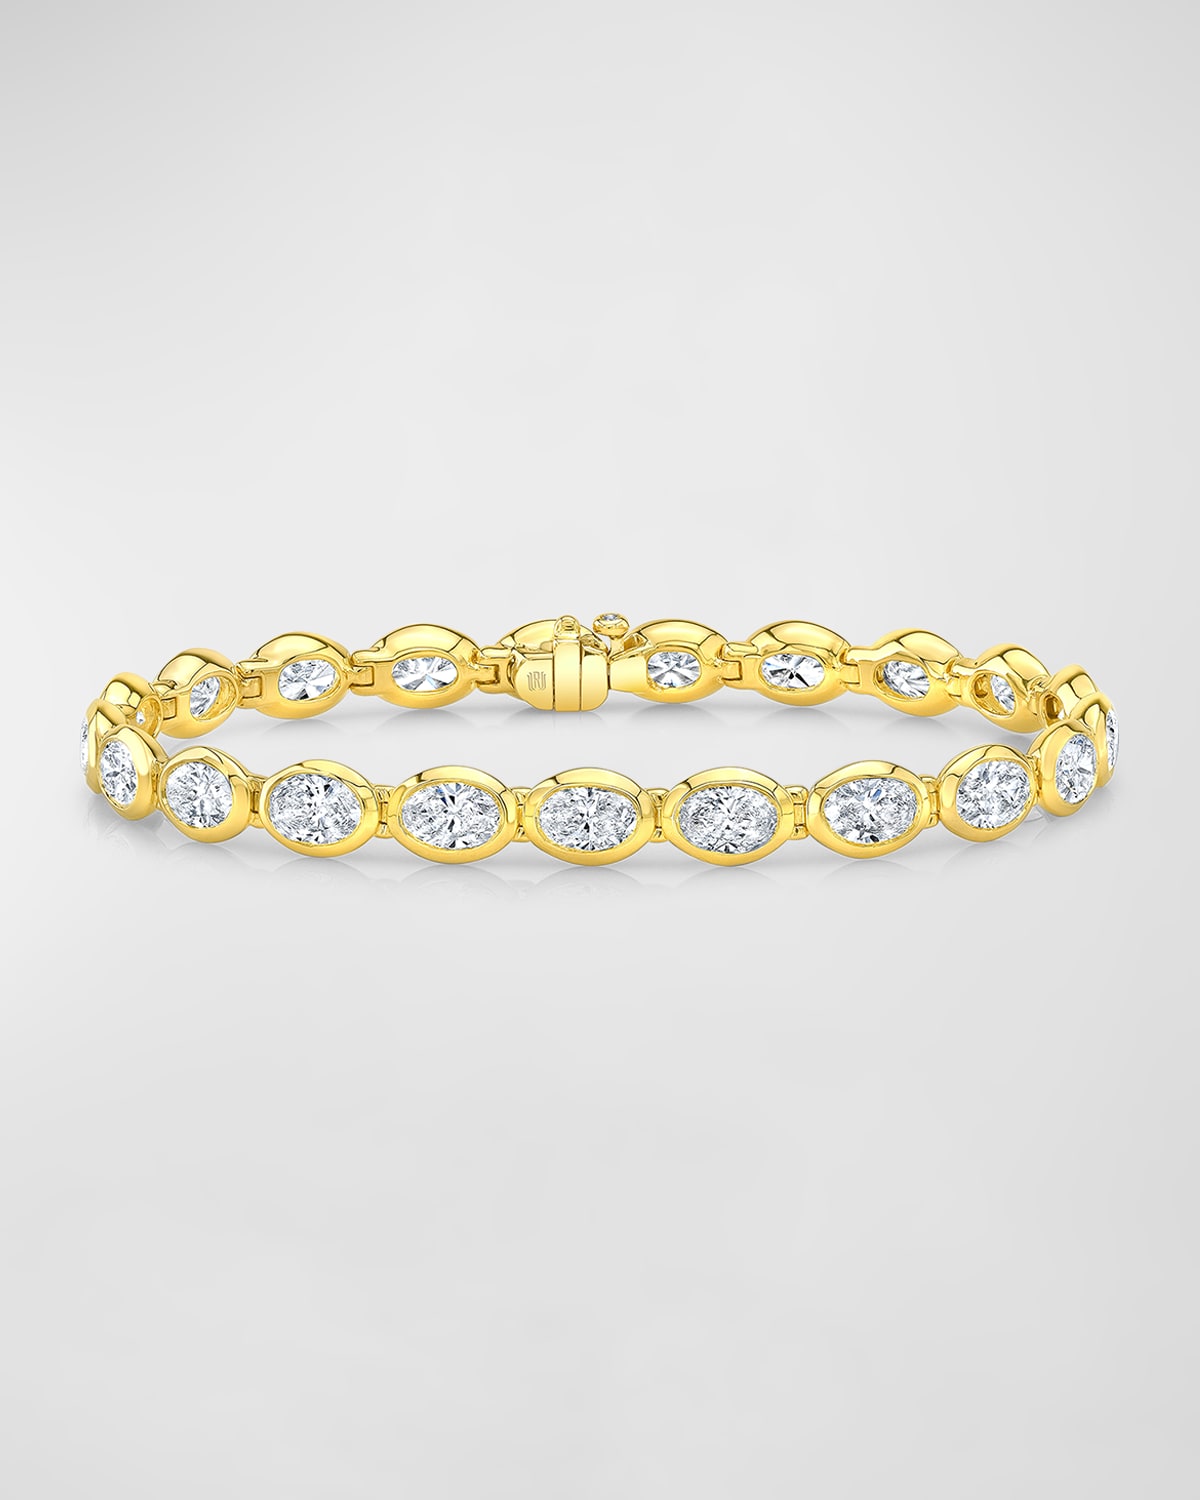 Rahaminov Diamonds 18k Yellow Gold Oval Diamond Bezel Set Bracelet, 6.75"l